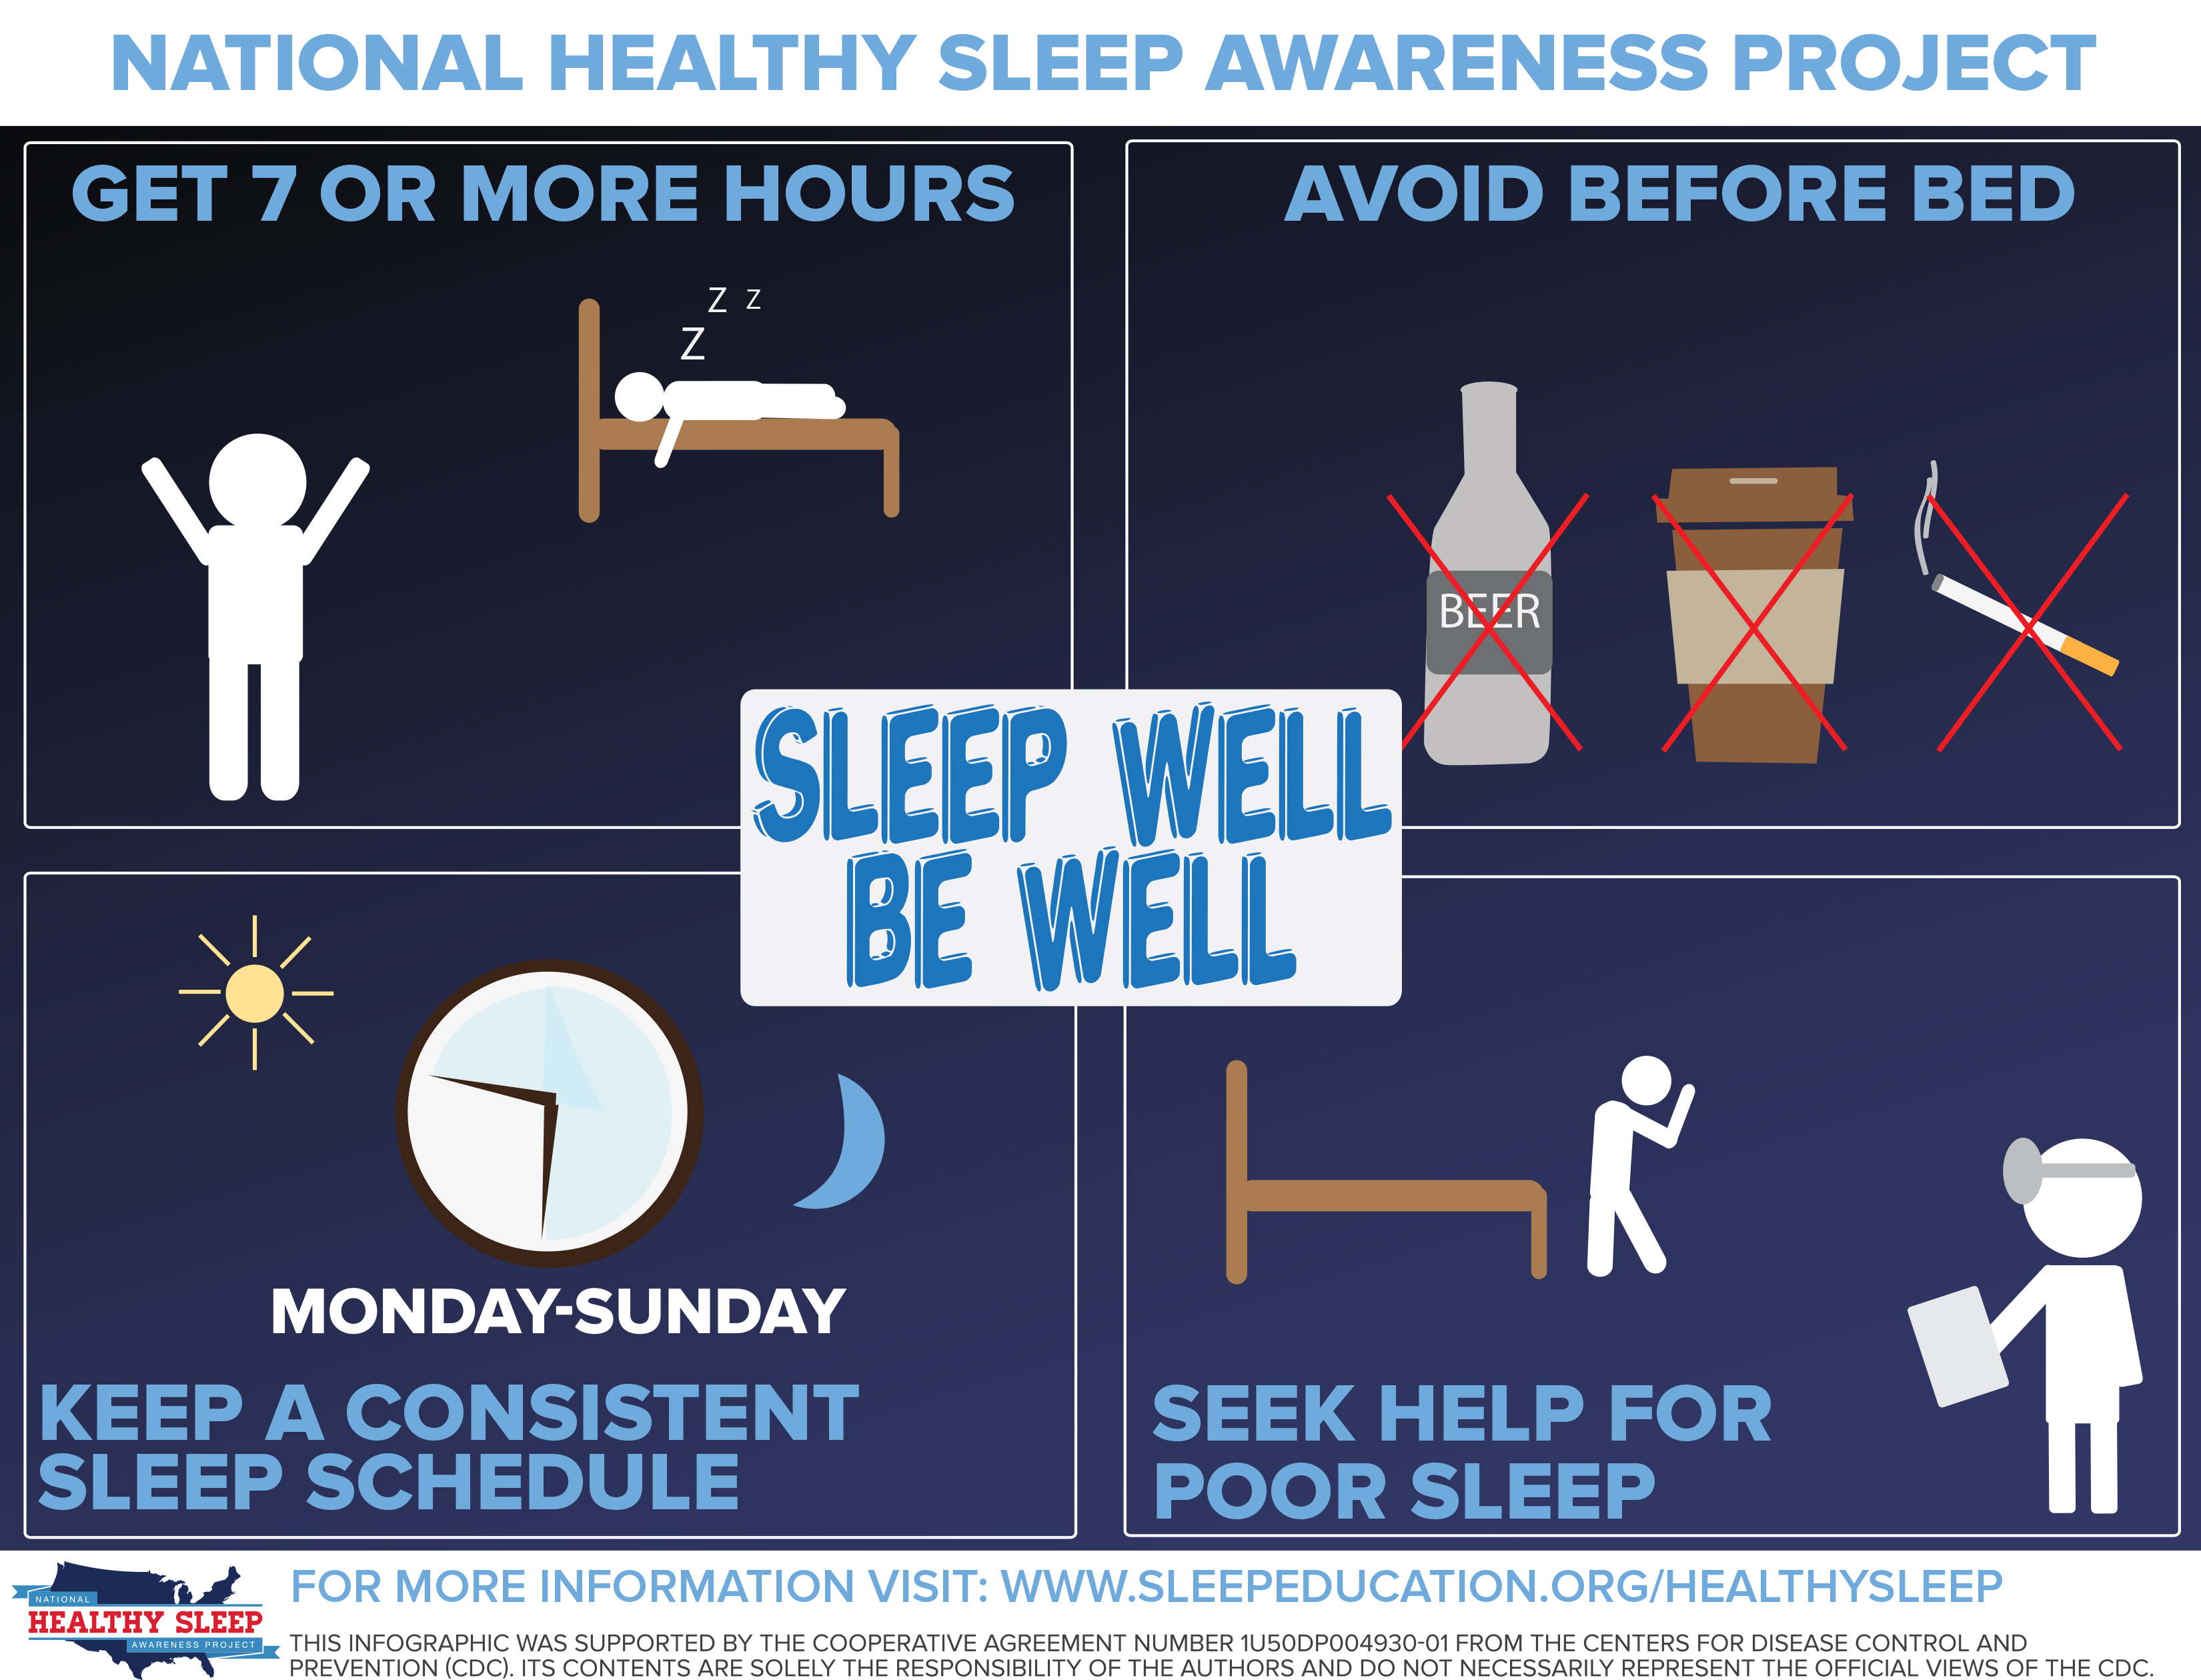 Promote healthy sleep